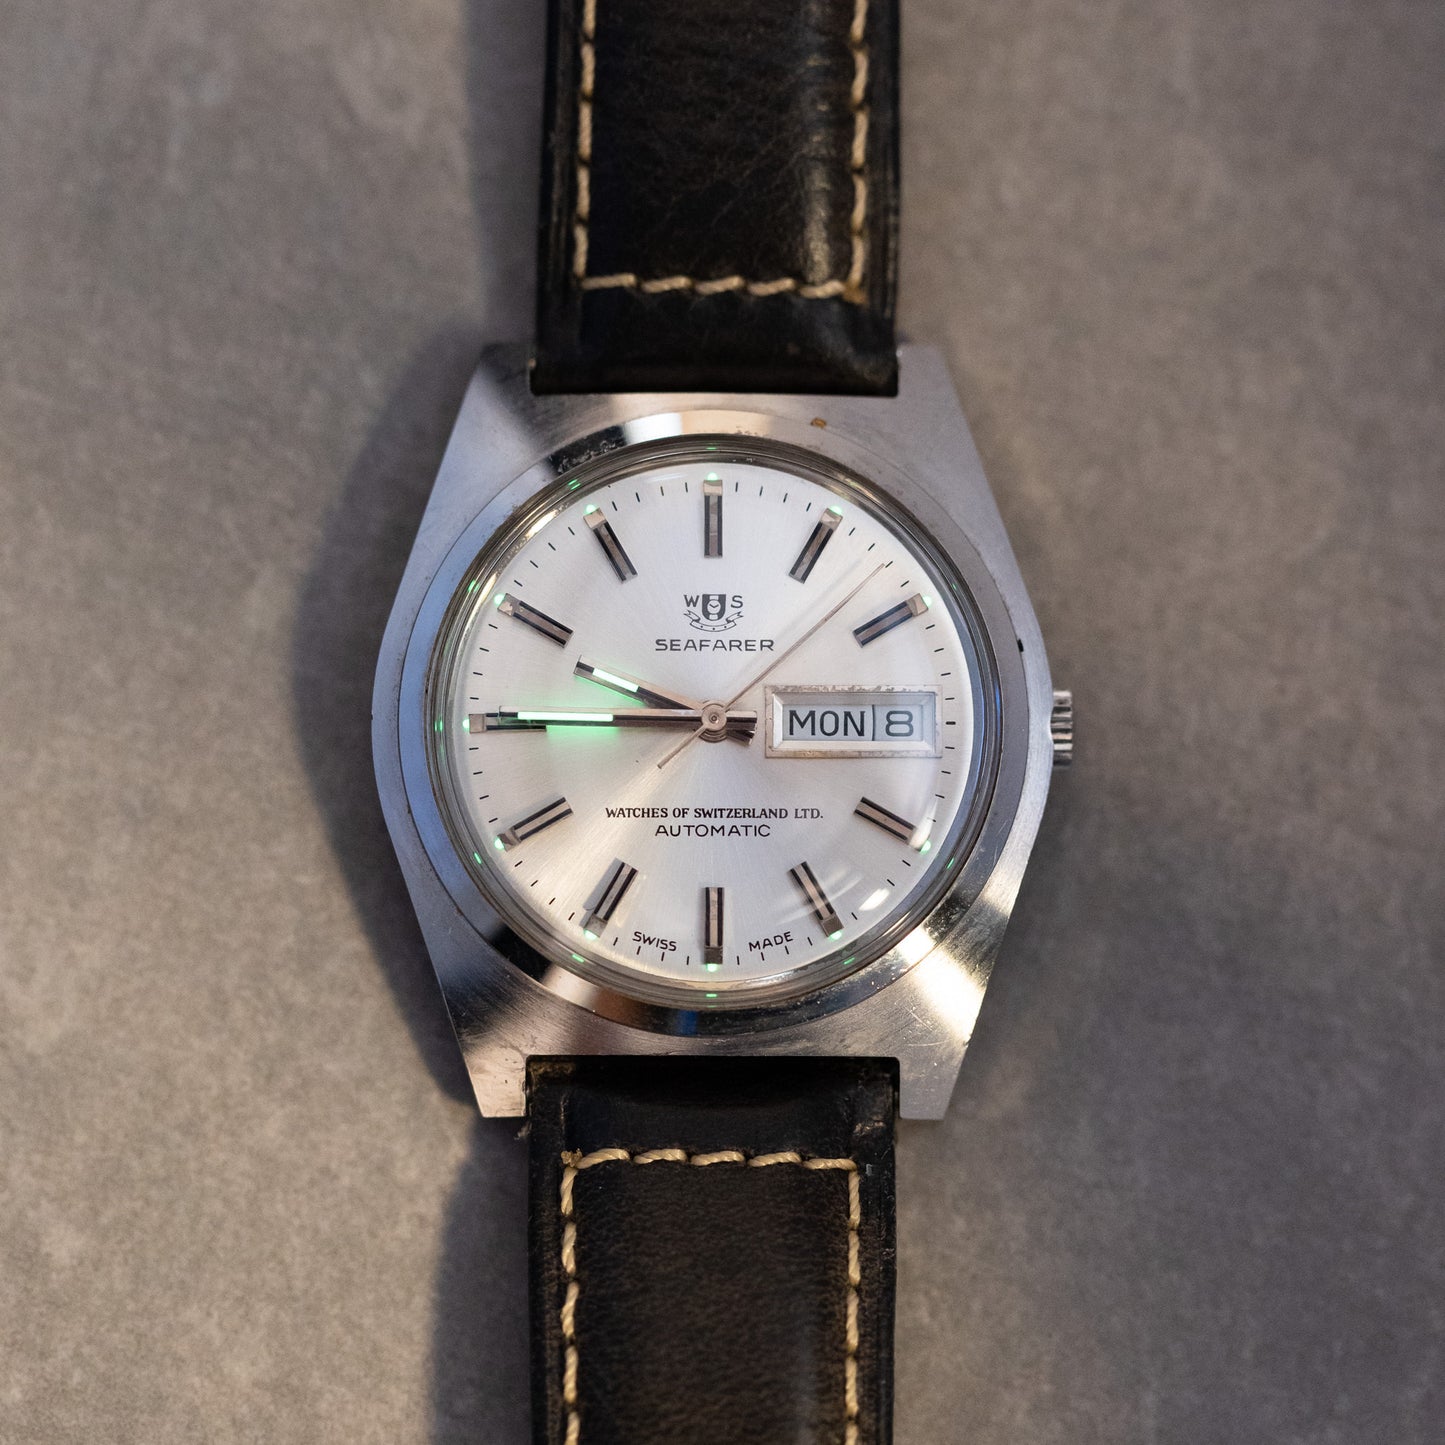 Watches of Switzerland Seafarer